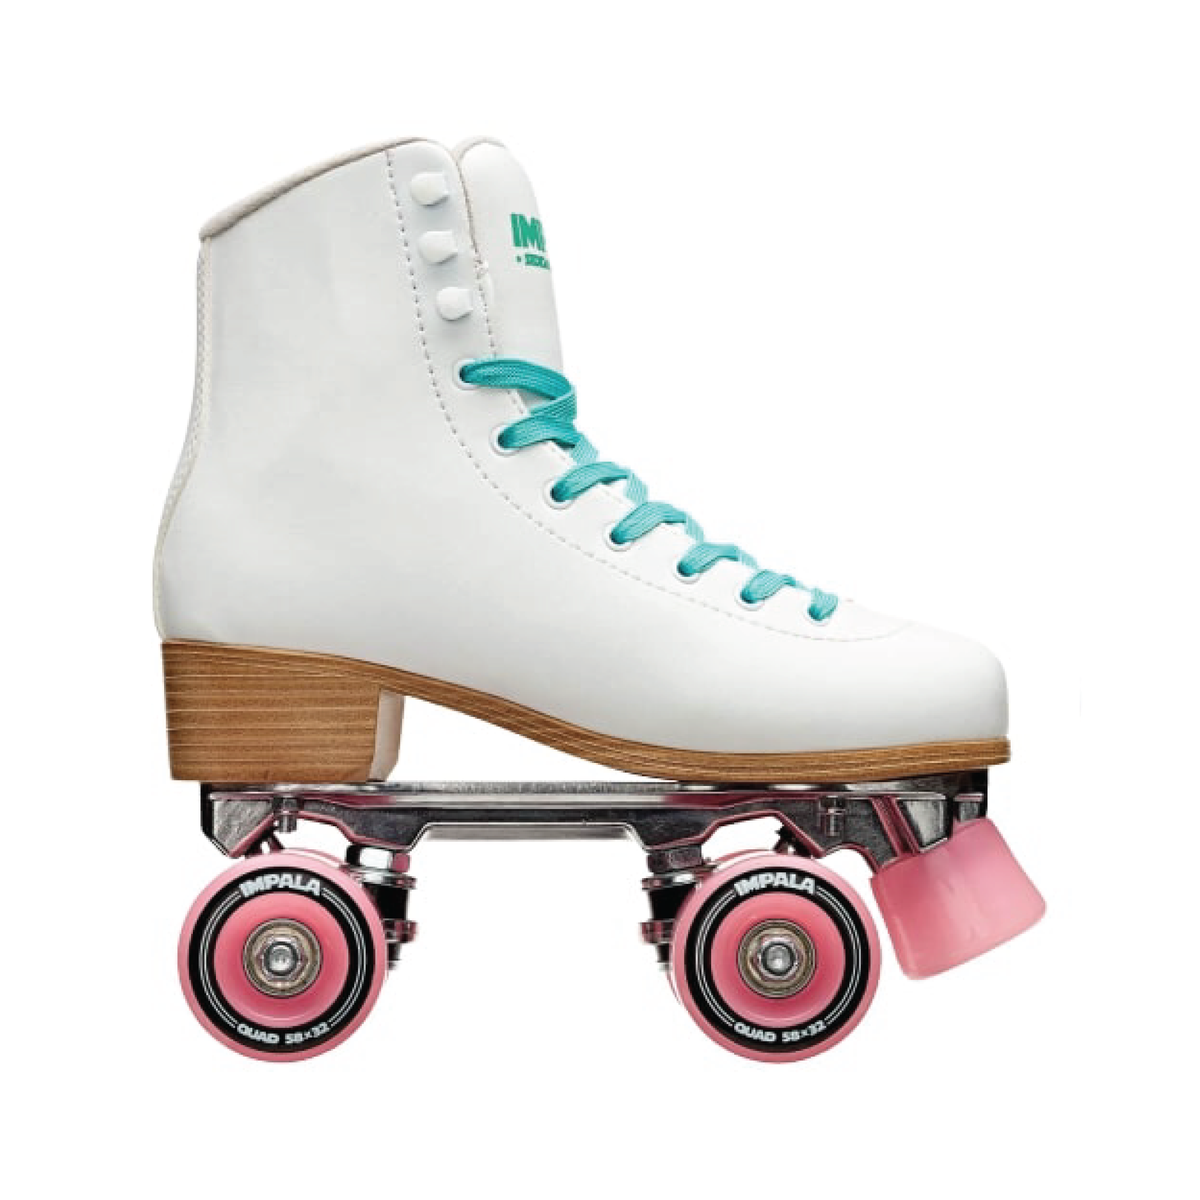 IMPALA SKATE roller skates A084-12668